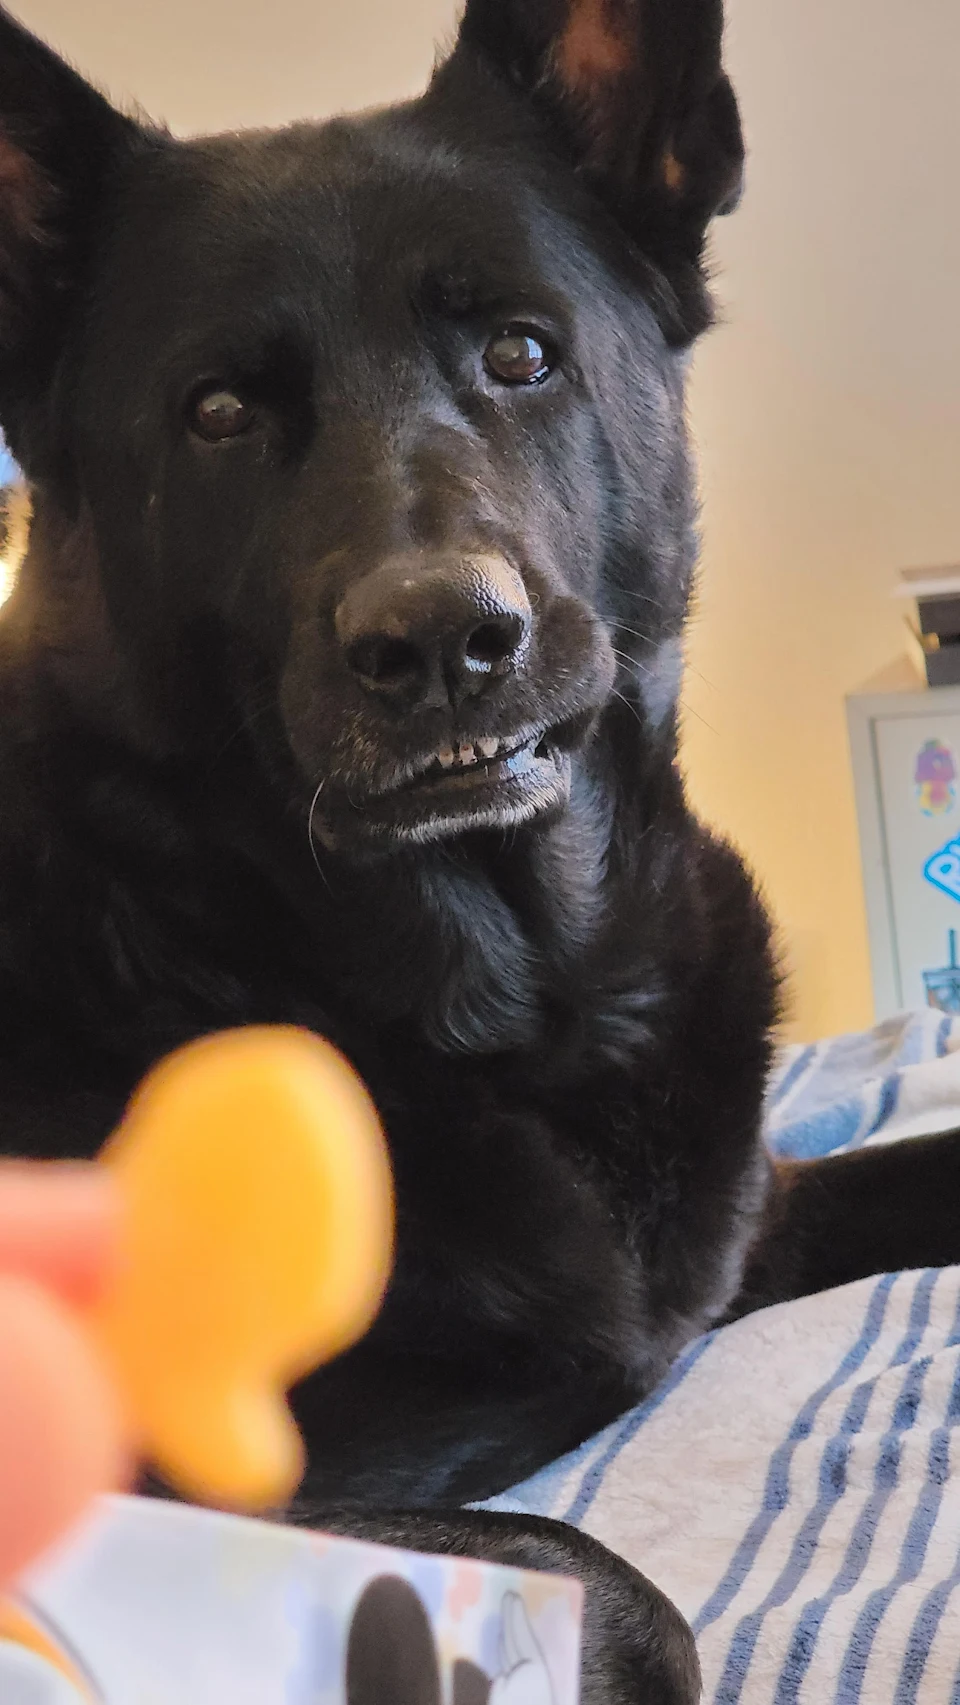 doggy wants a fish cracker :)